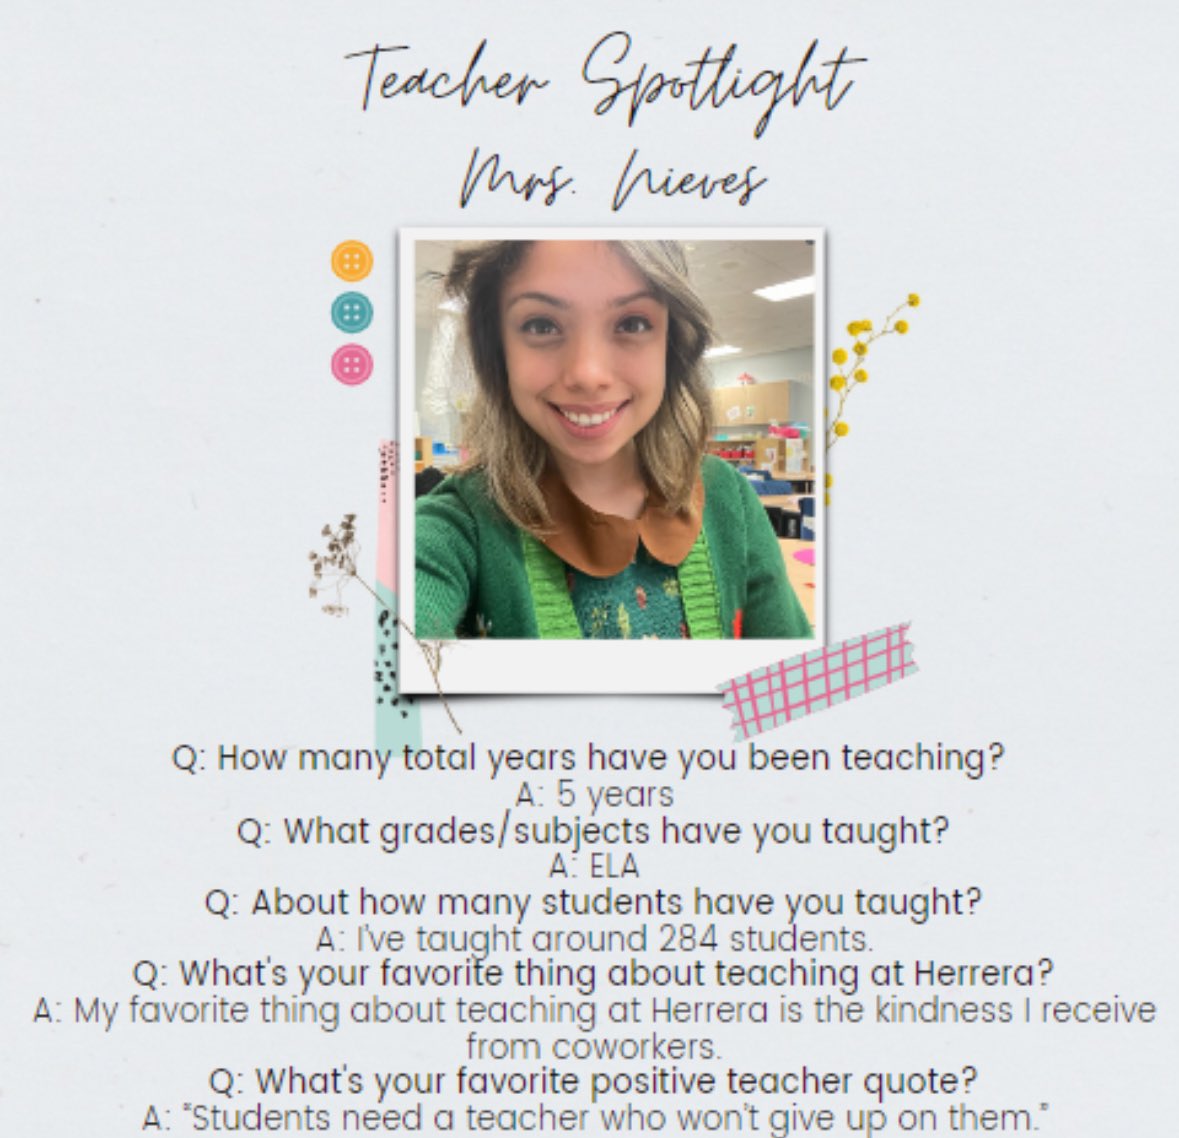 Teacher Spotlight #5: Mrs. Nieves🐾
@HoustonISD @TeamHISD 
#TAW #HerrerHuskies #ThankHISDTeachers